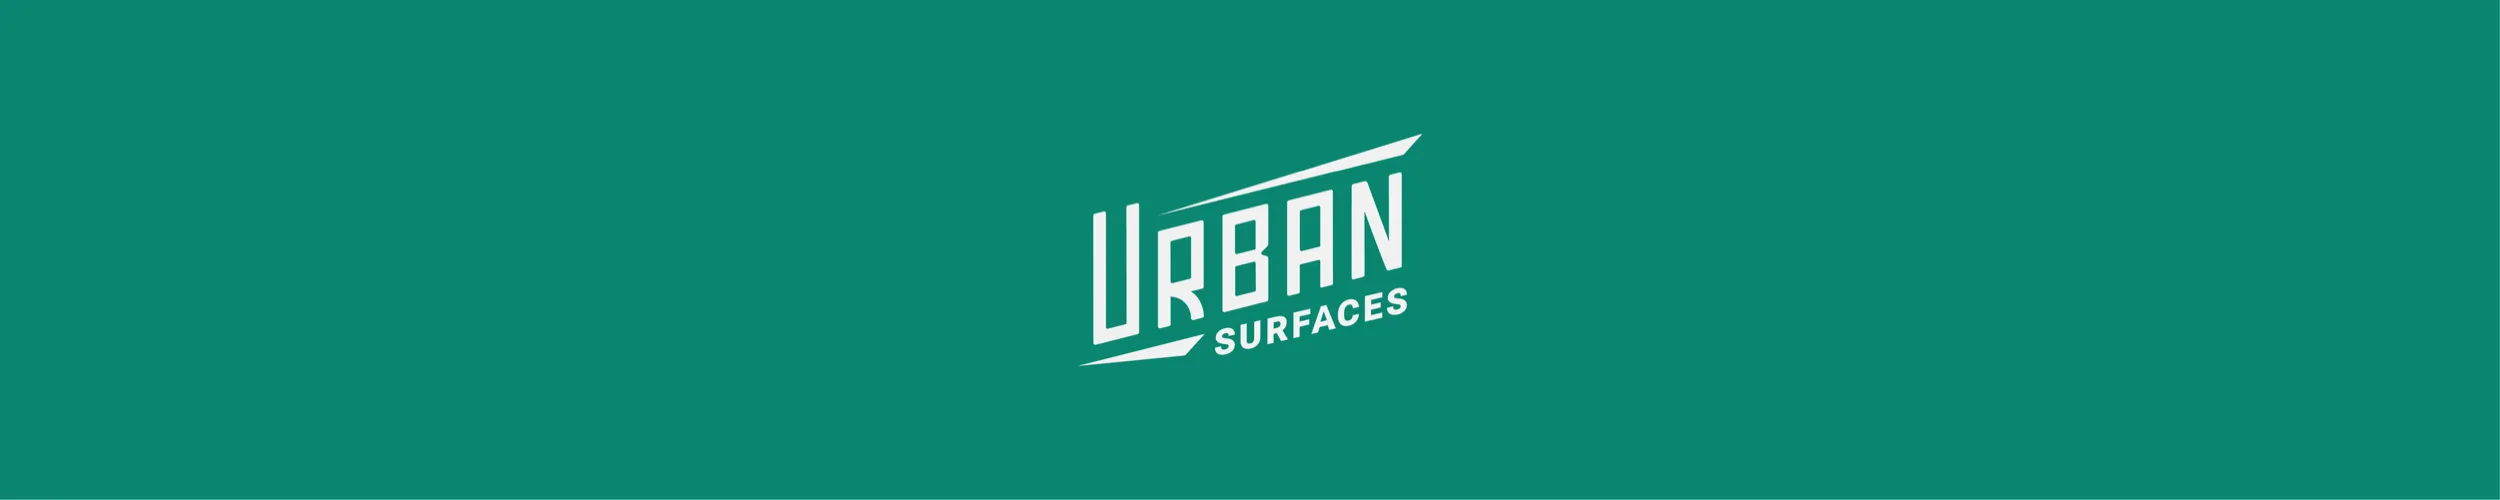 Urban Surfaces logo banner in green